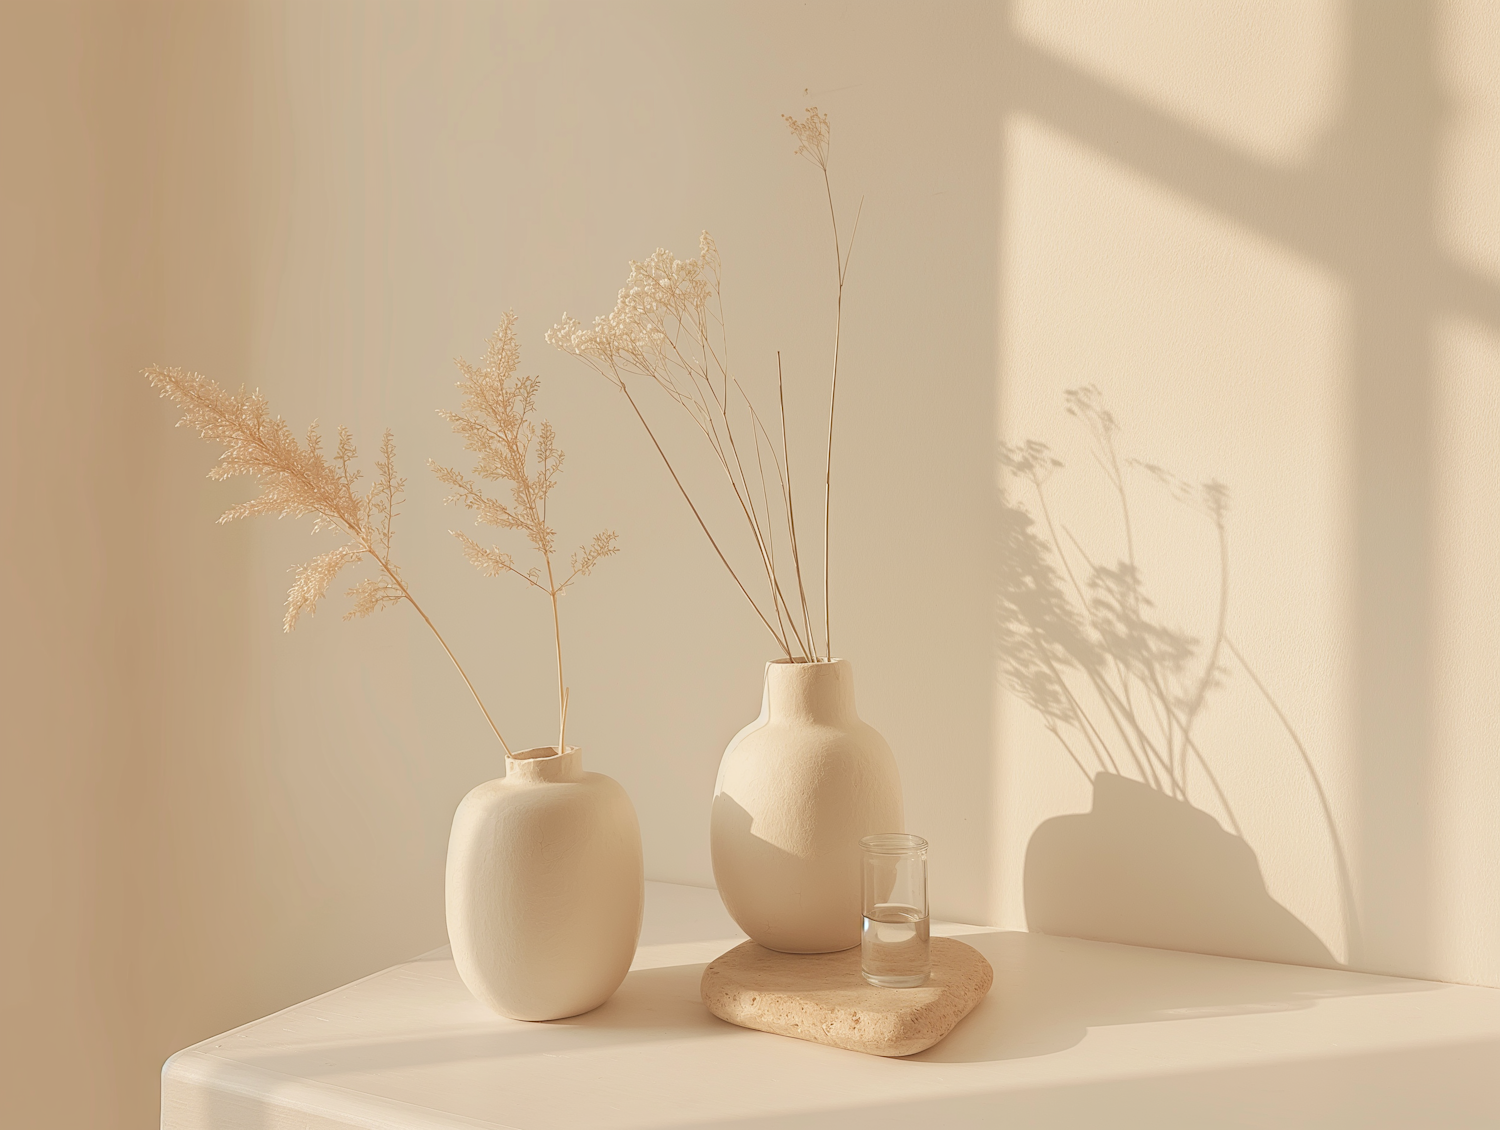 Serene Still-Life with Ceramic Vases